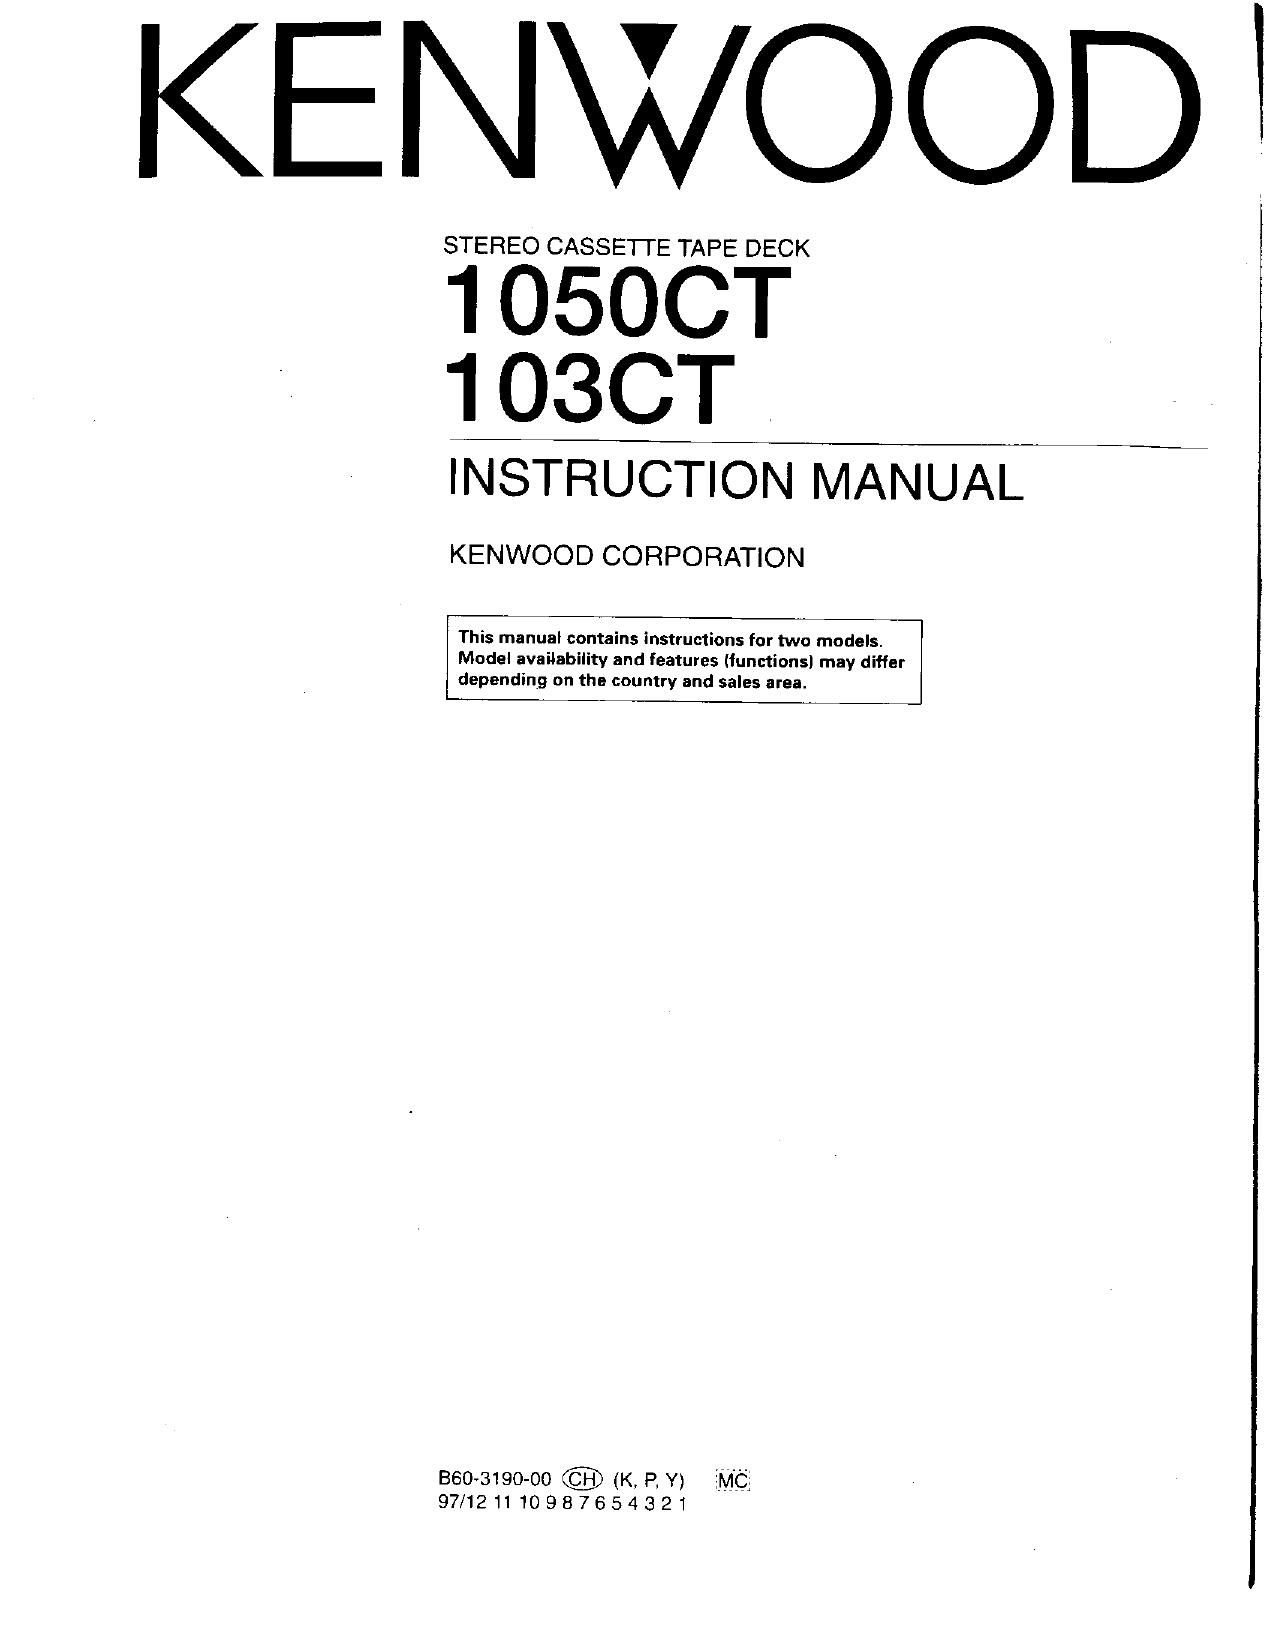 Kenwood 1050 CT Owners Manual